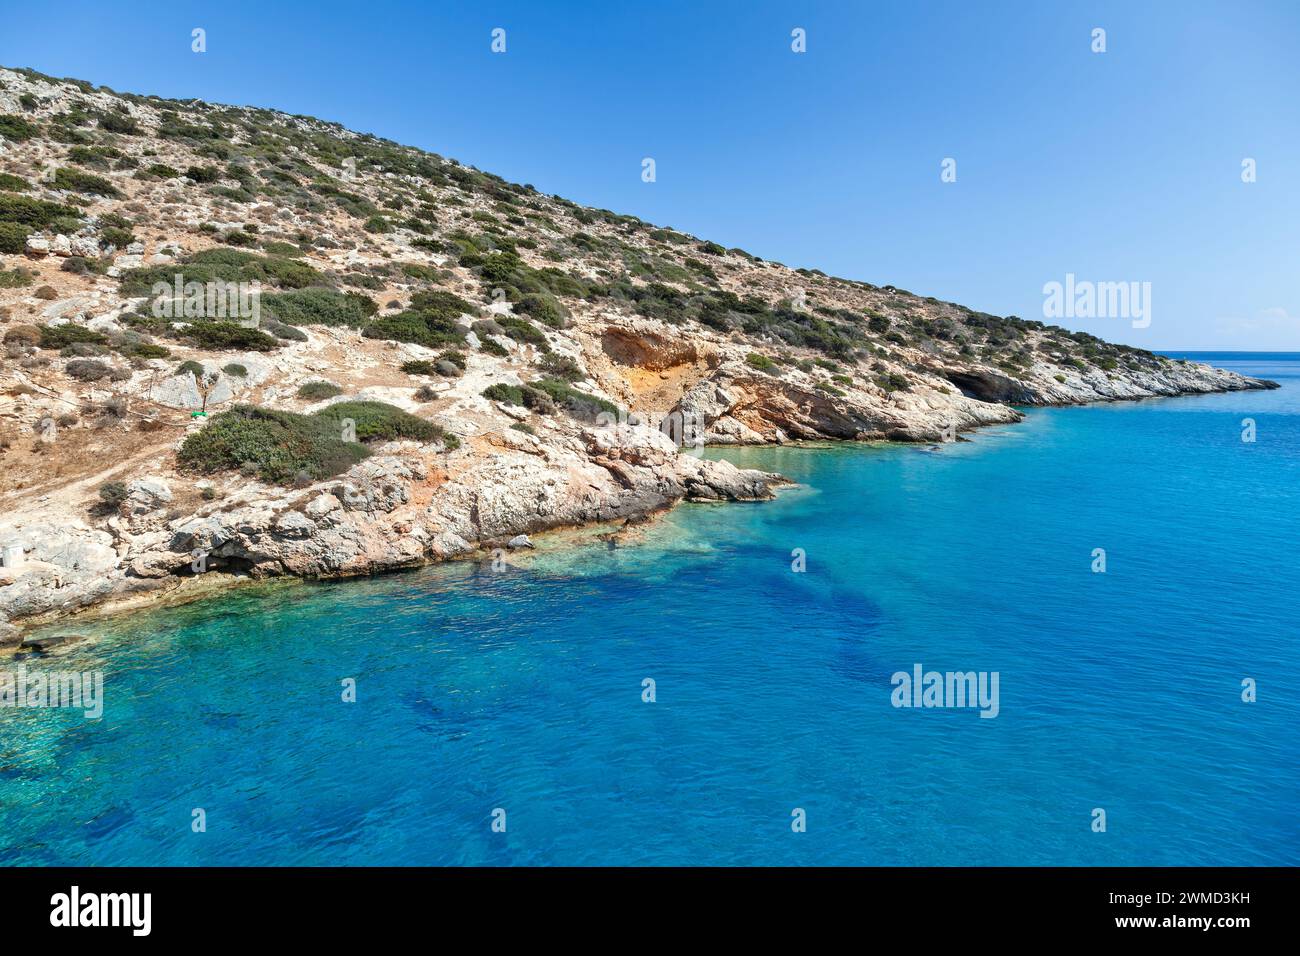 Rocky coastline in Schinoussa island, Greece, one of the Lesser Cyclades islands, close to Naxos, in Cyclades islands of the Aegean sea, Greece Stock Photo